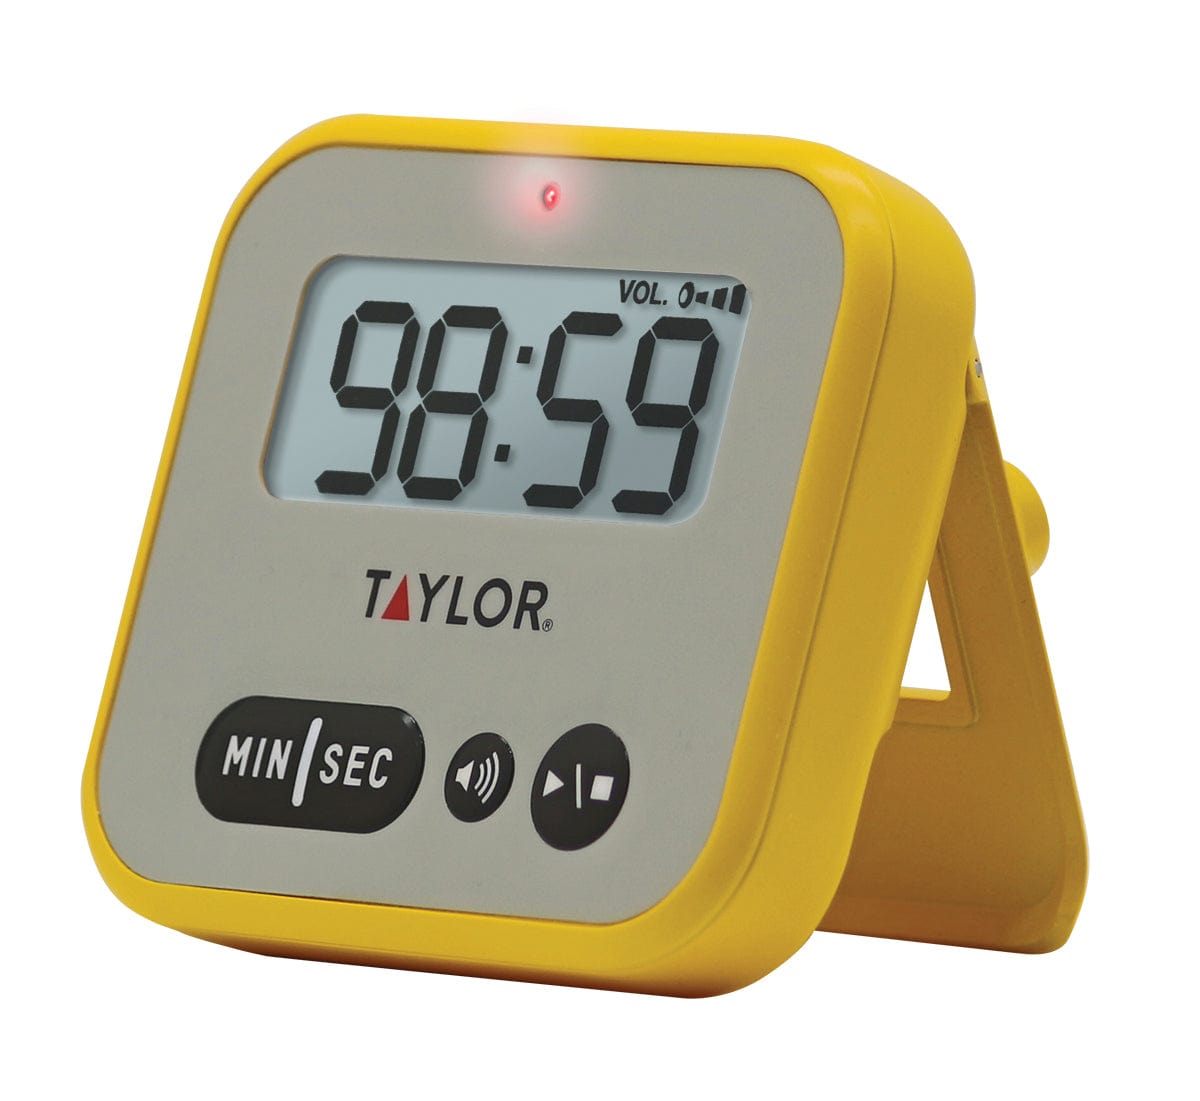 Taylor® Multi Purpose Timer, 1 ct - City Market